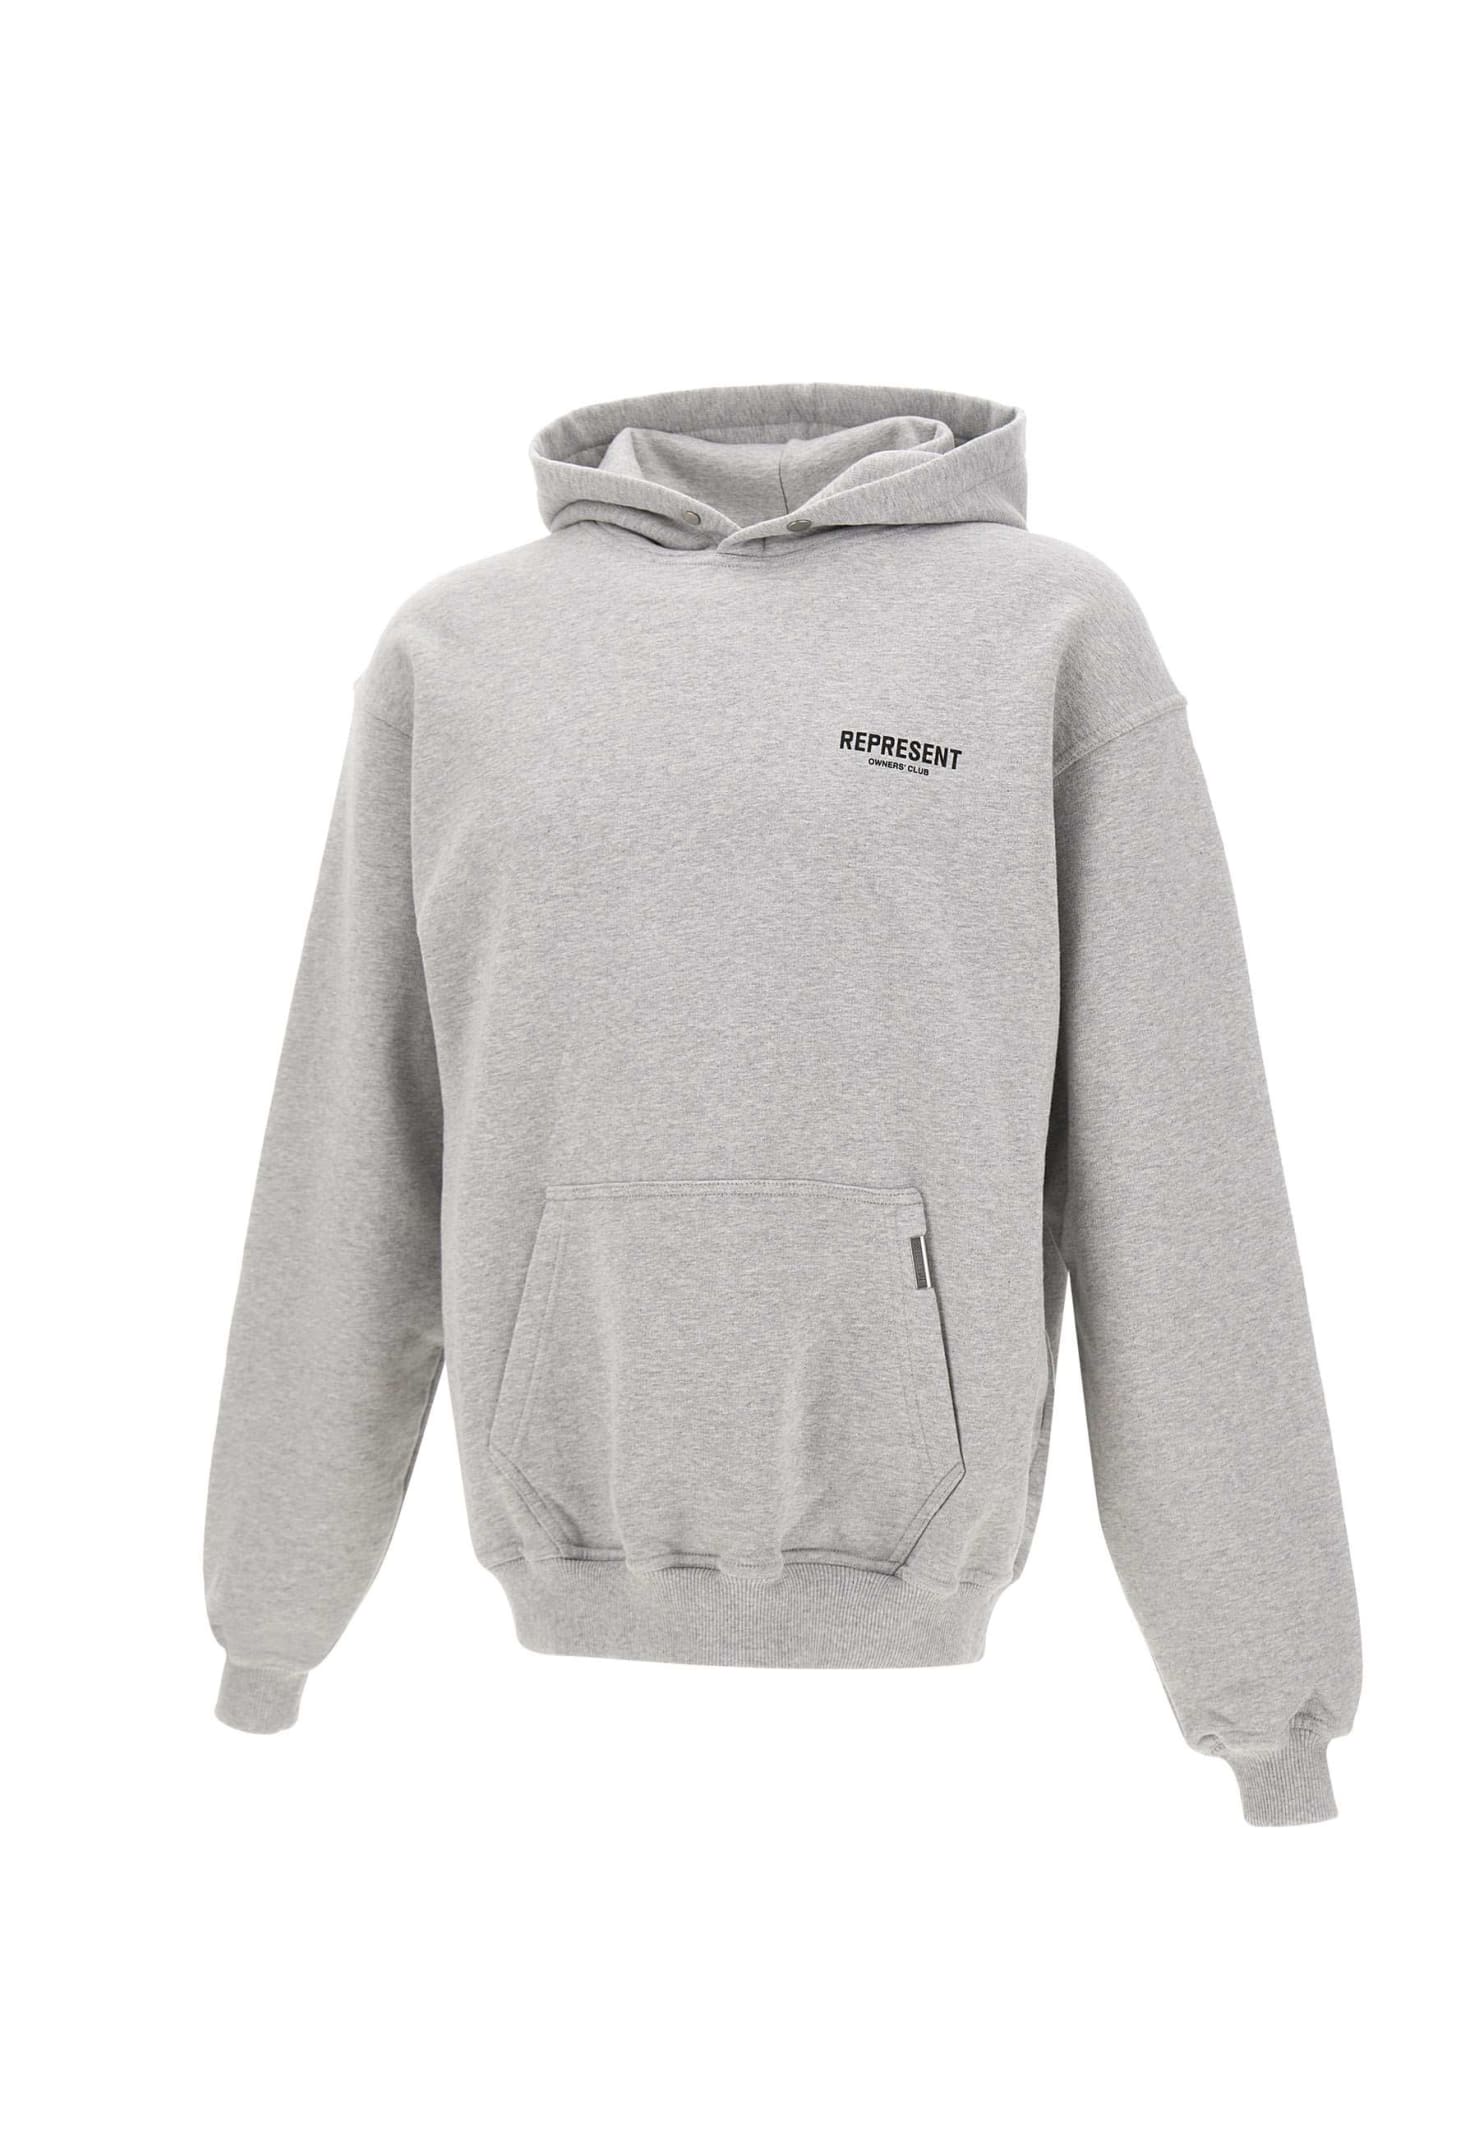 Shop Represent Owners Club Cotton Sweatshirt In Grey